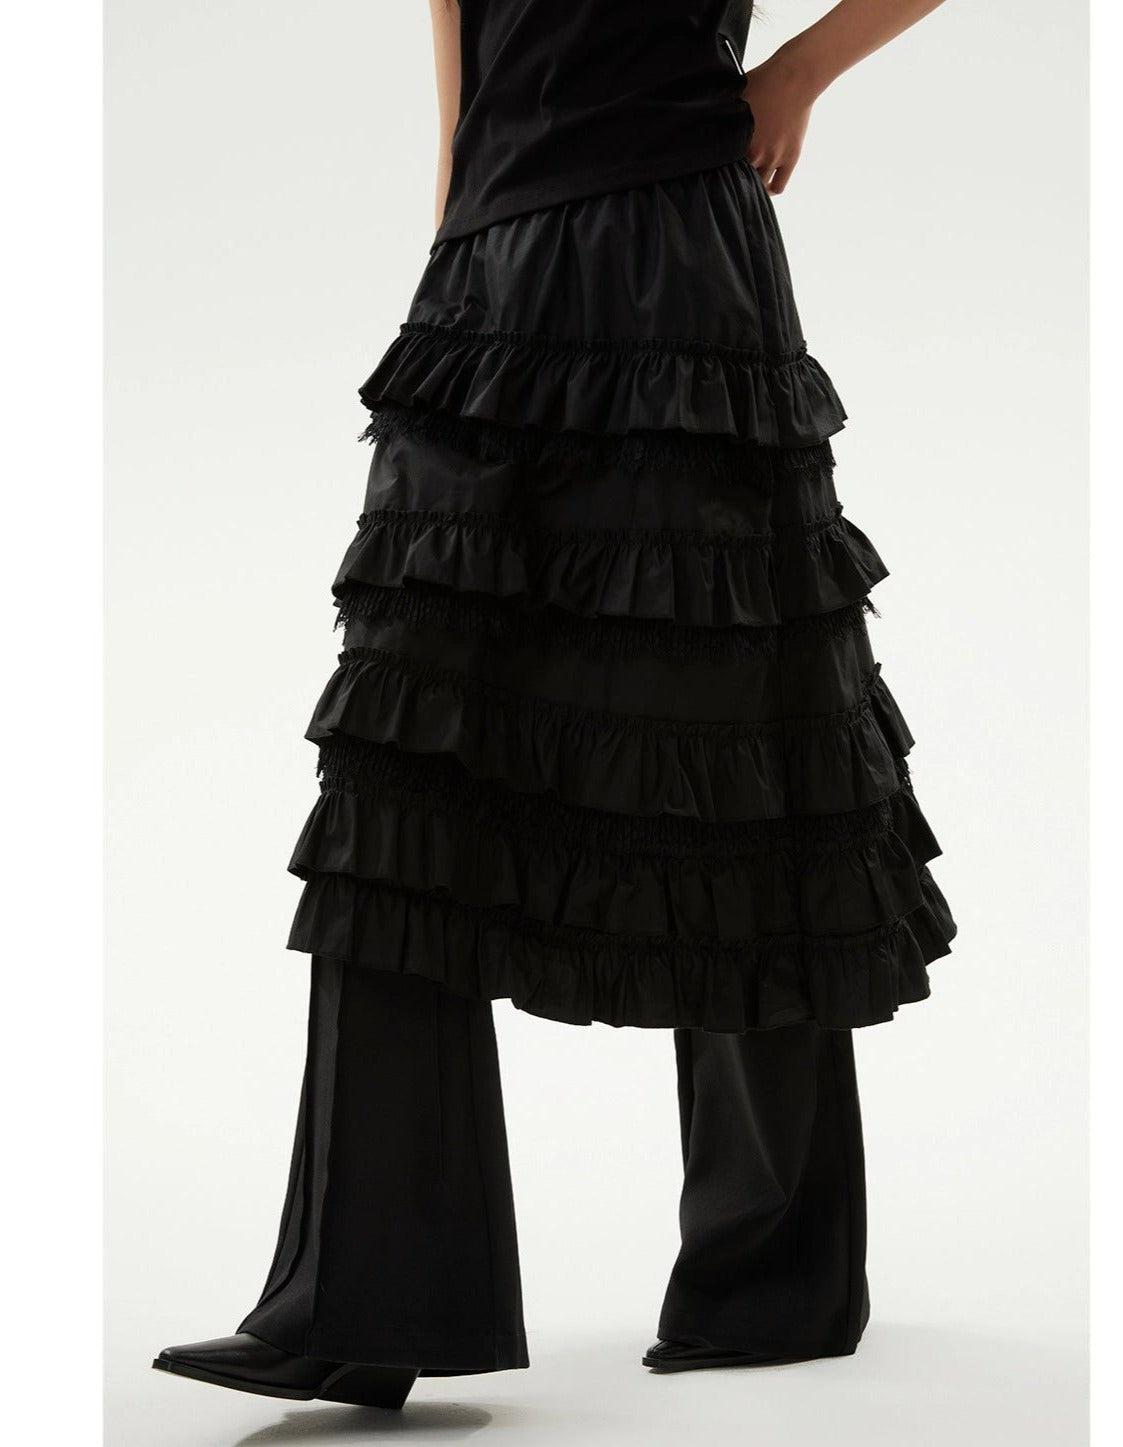 Ruffles Detail Long Skirt Korean Street Fashion Skirt By Funky Fun Shop Online at OH Vault